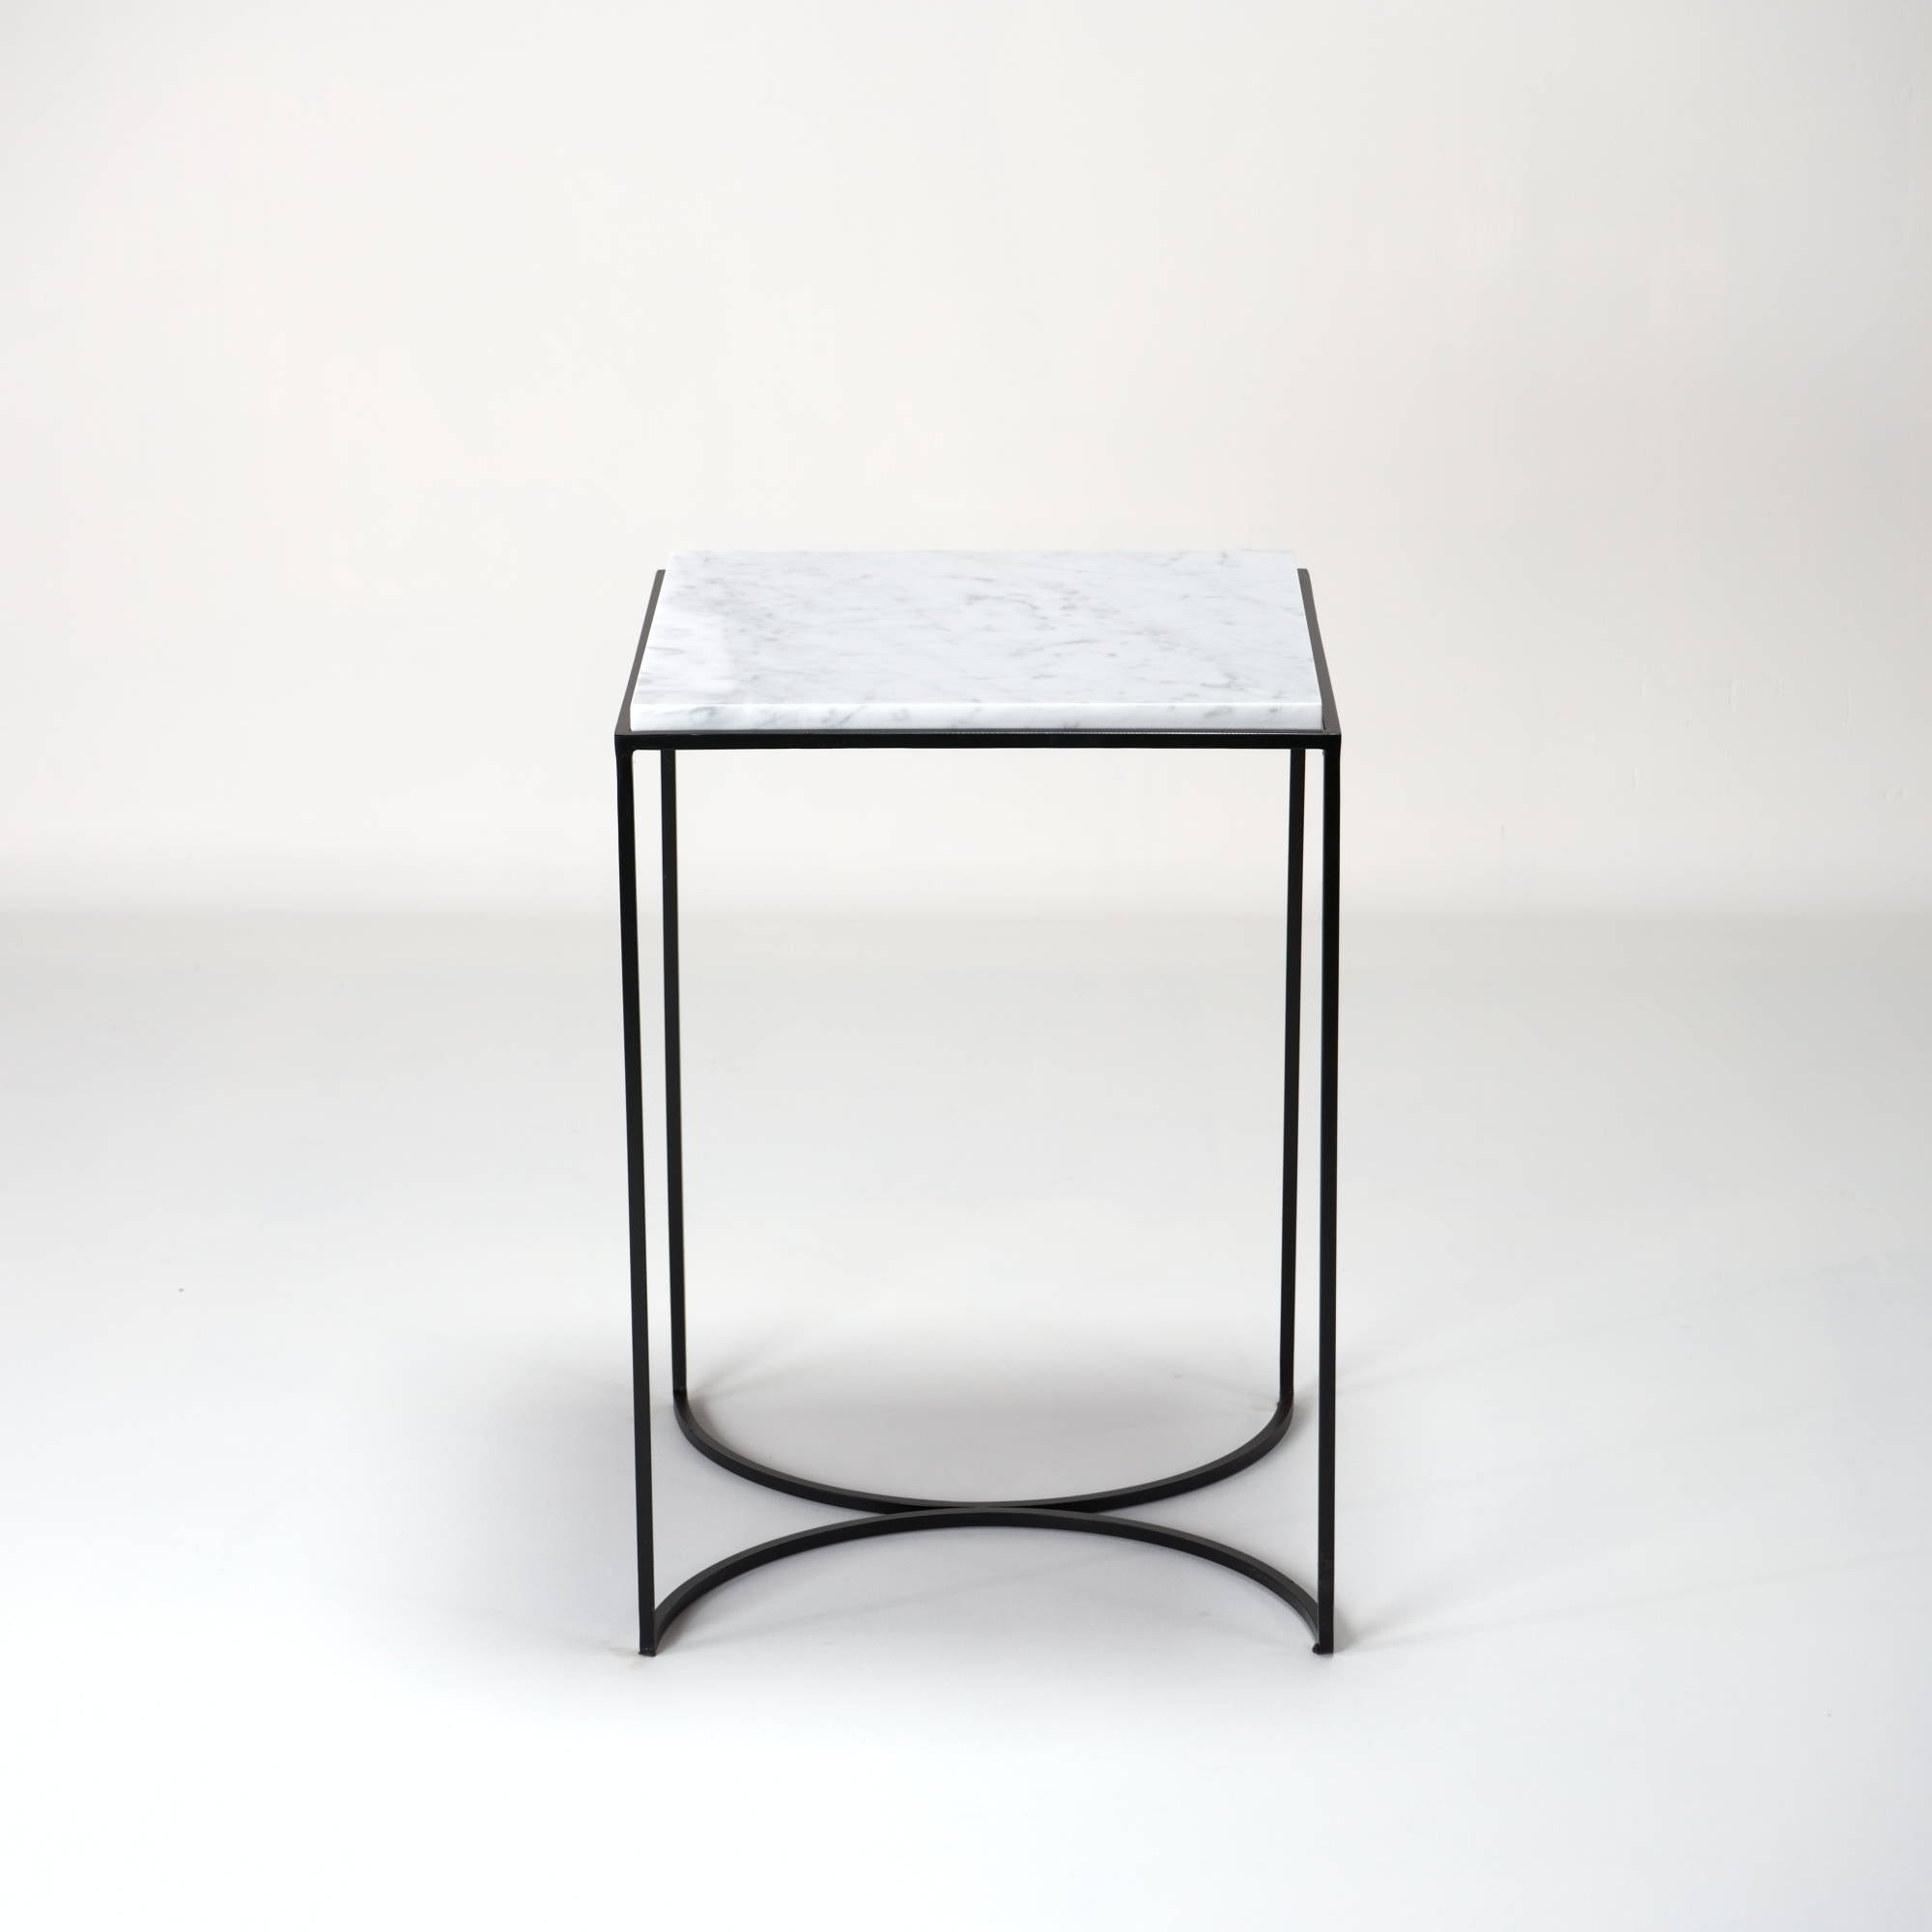 NaiveE - Carrara Marble side table